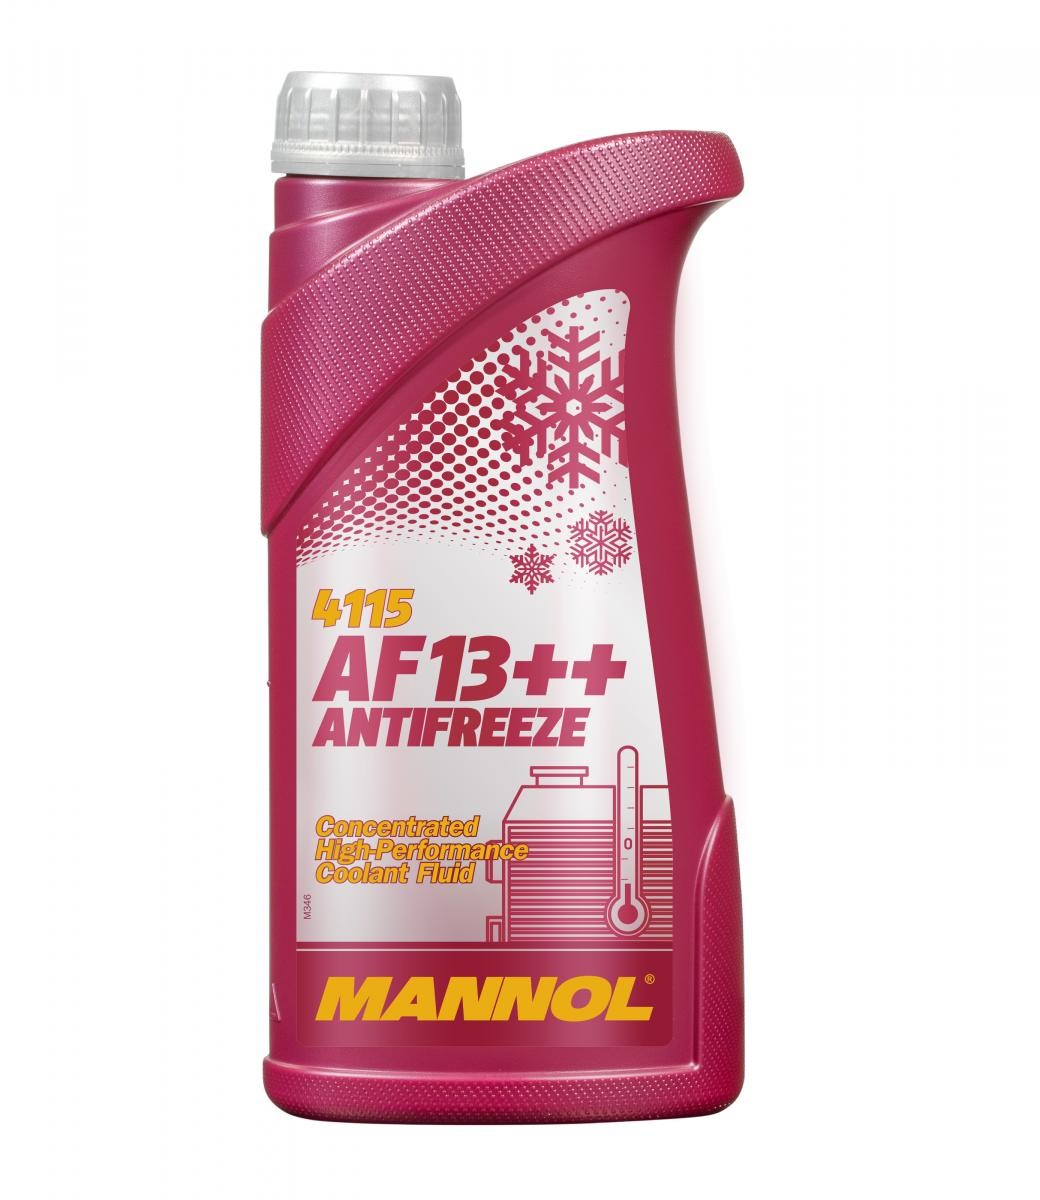 HERCULES MX Kühlmittel G12 Rot, 1l, -38(50/50) MANNOL AF13++, High-performance MN4115-1